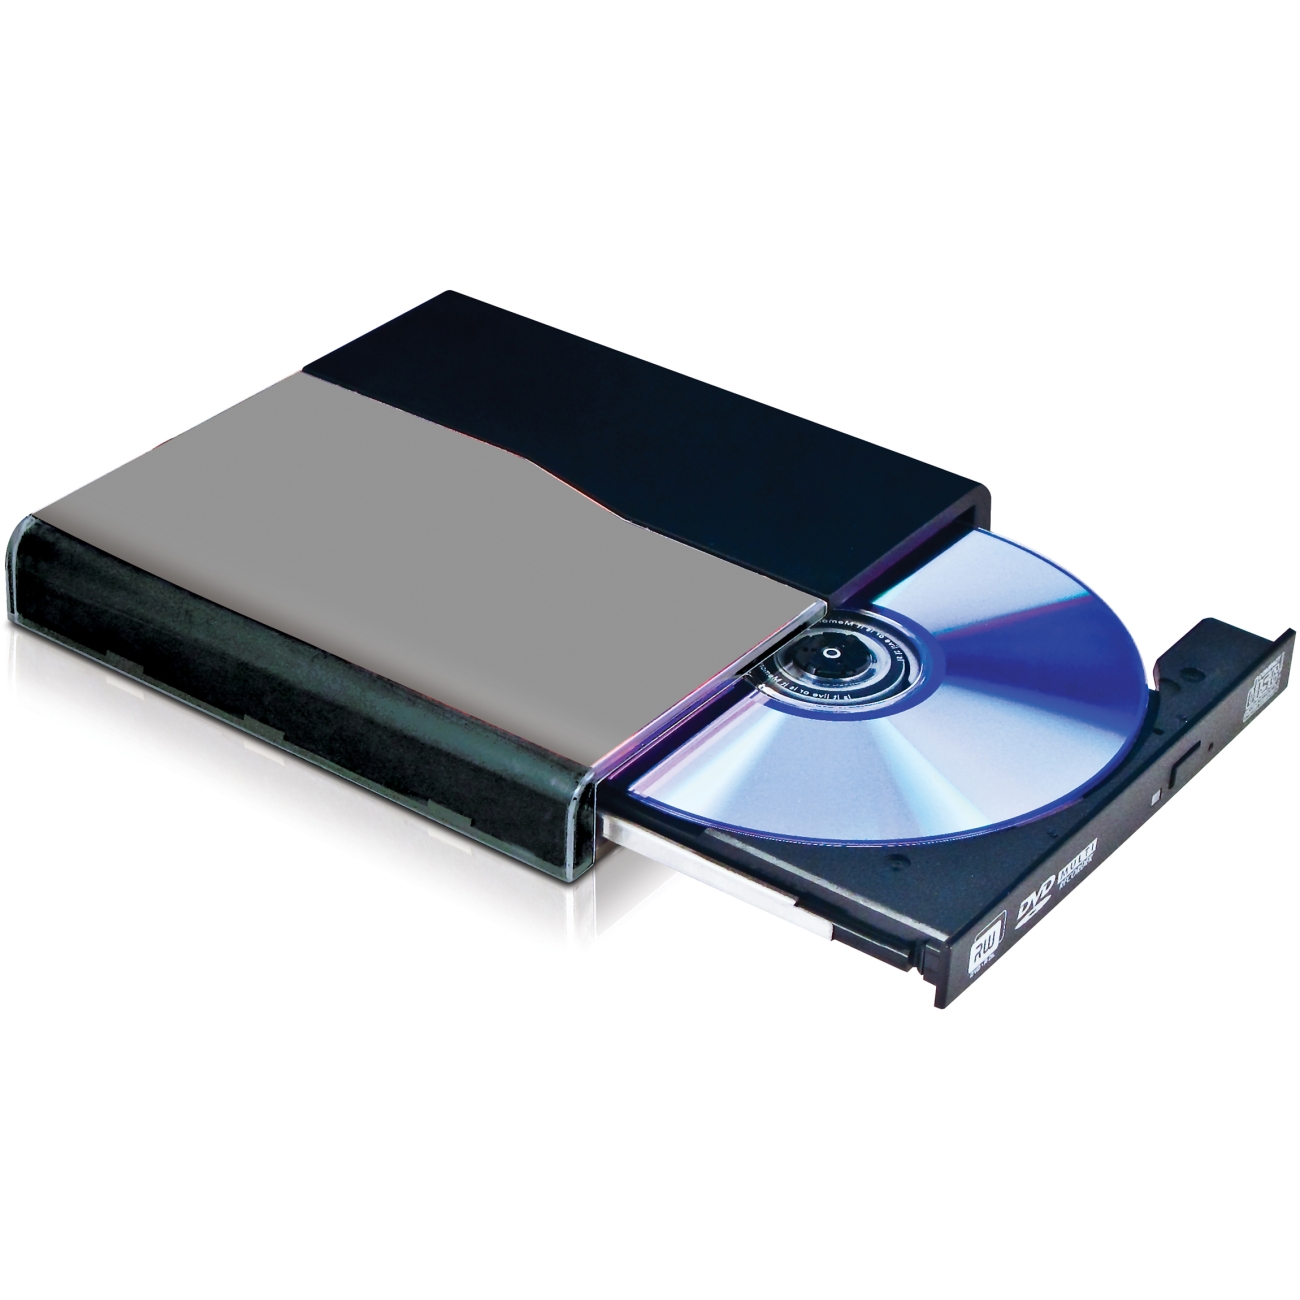 I/O MAGIC Model IDVD8PB2 Black DVD RW Slim External Drives